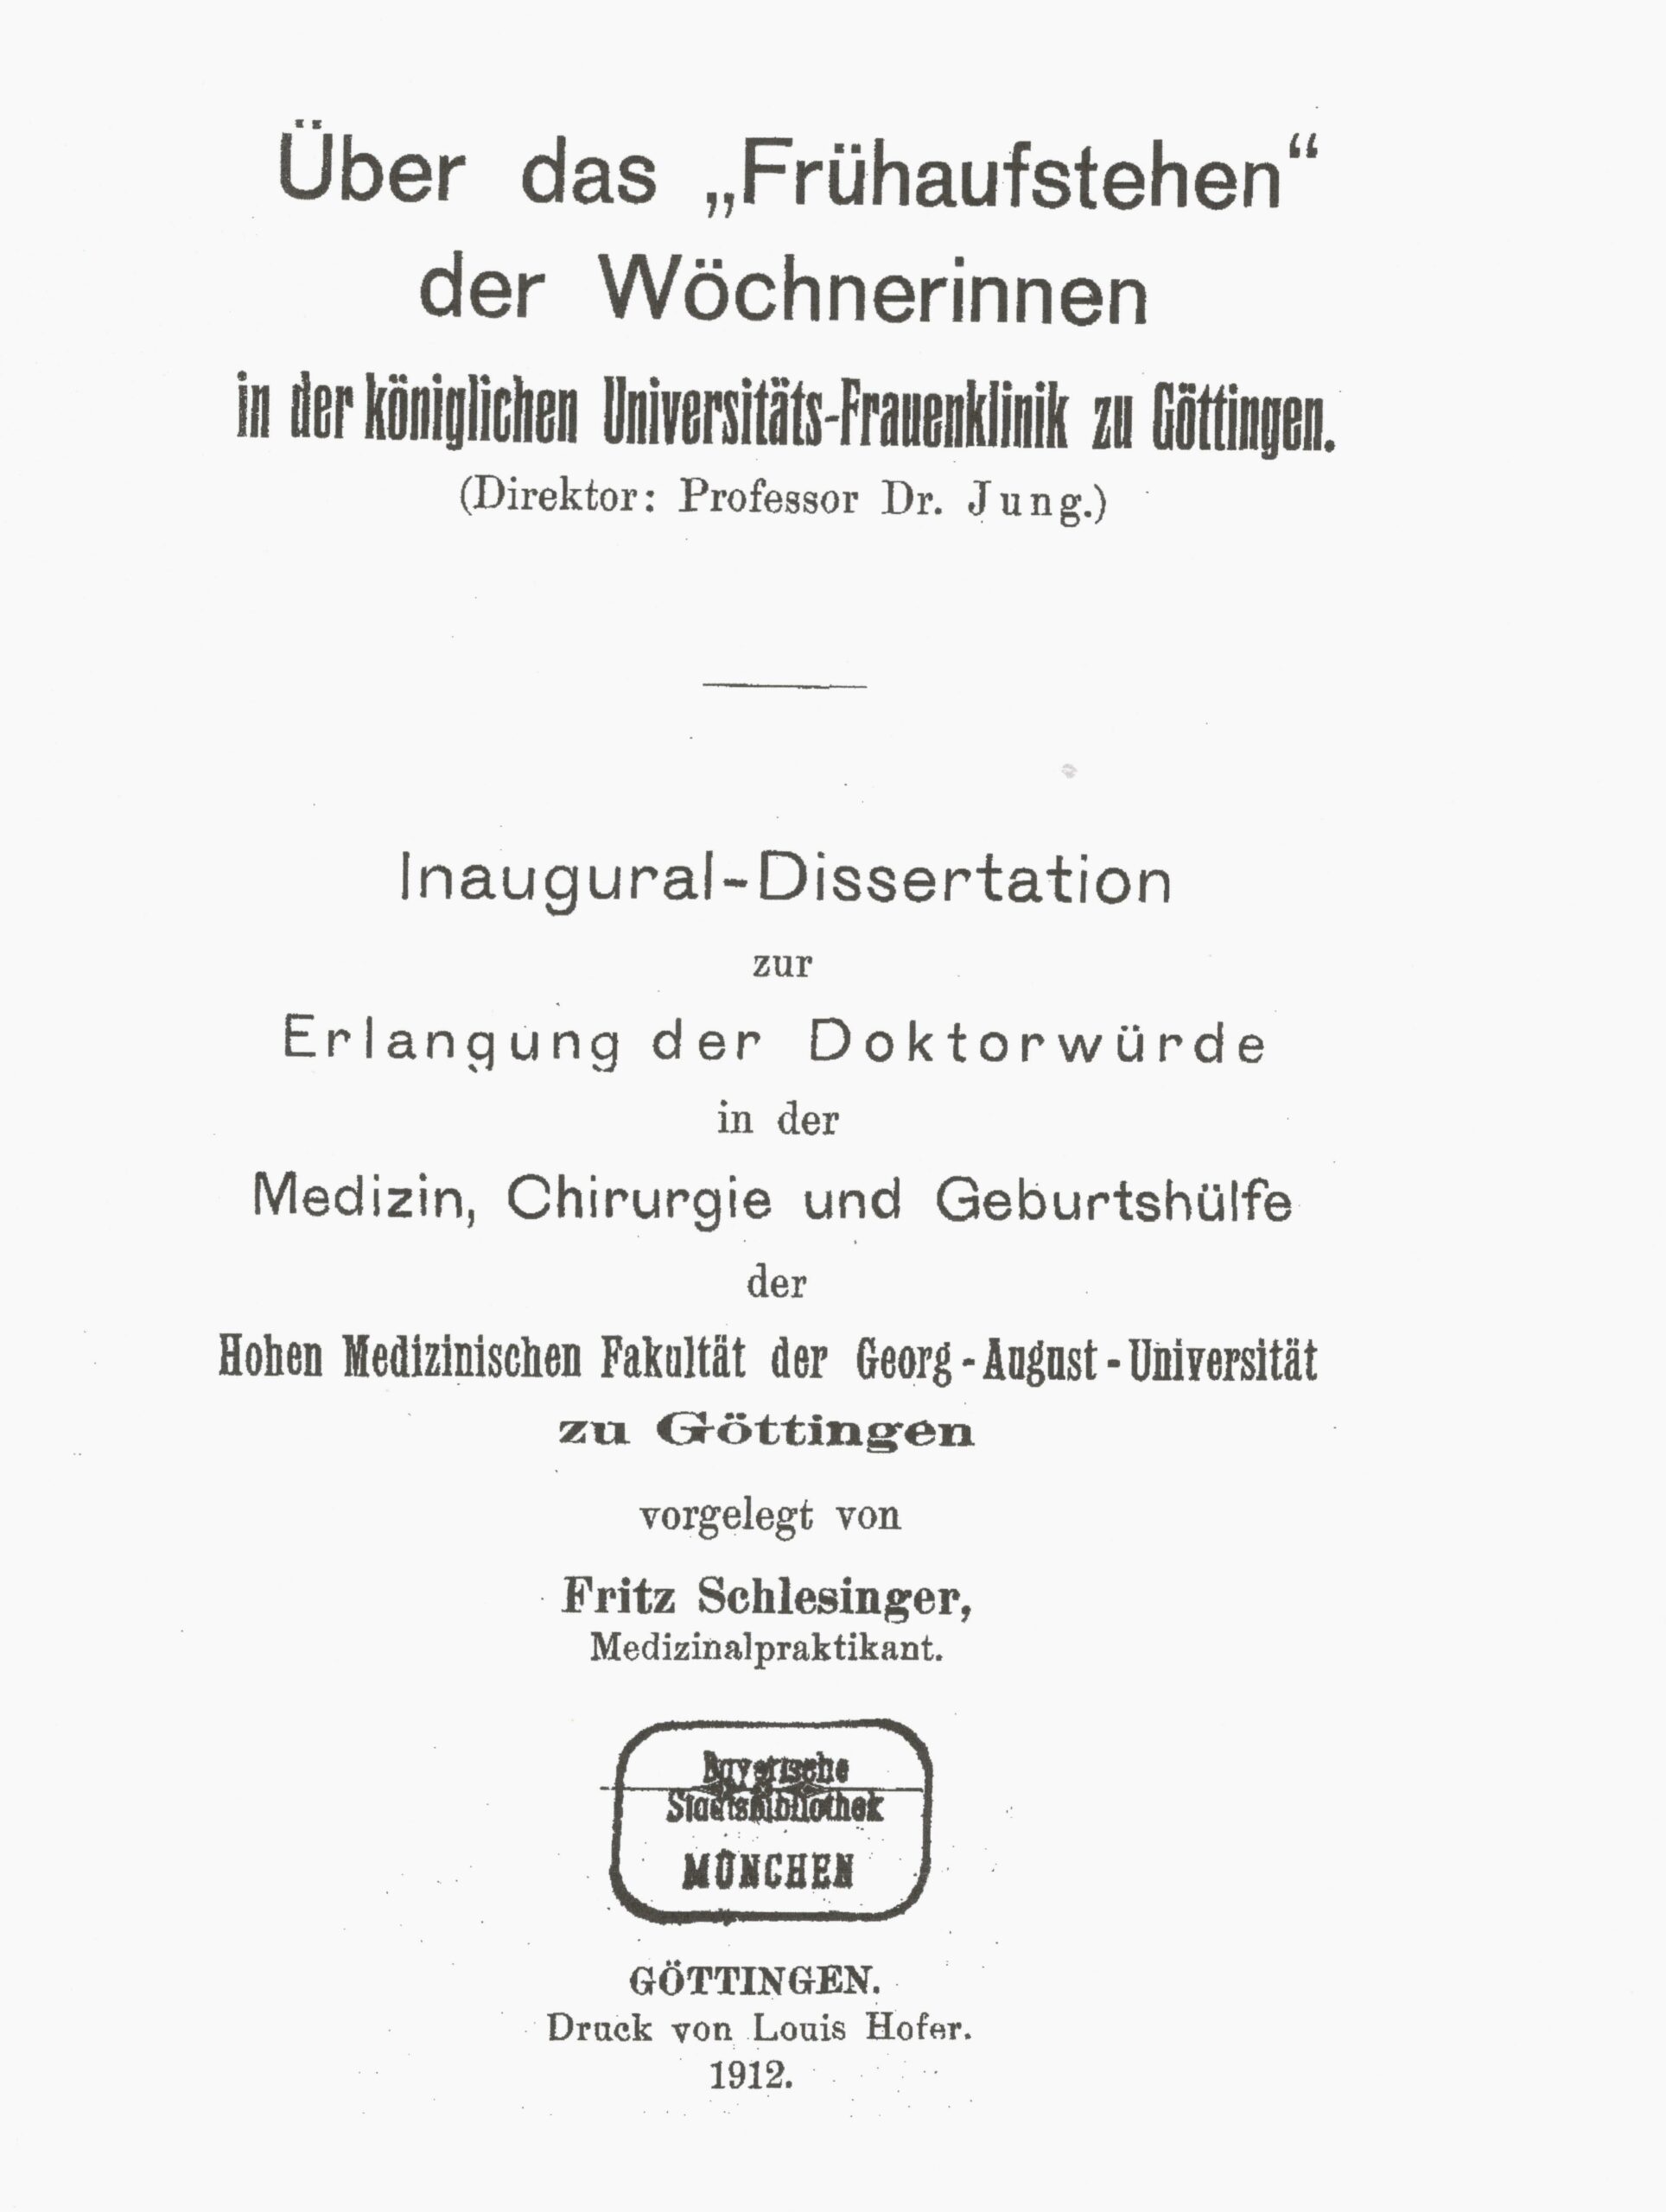 Dissertation, Göttingen 1912